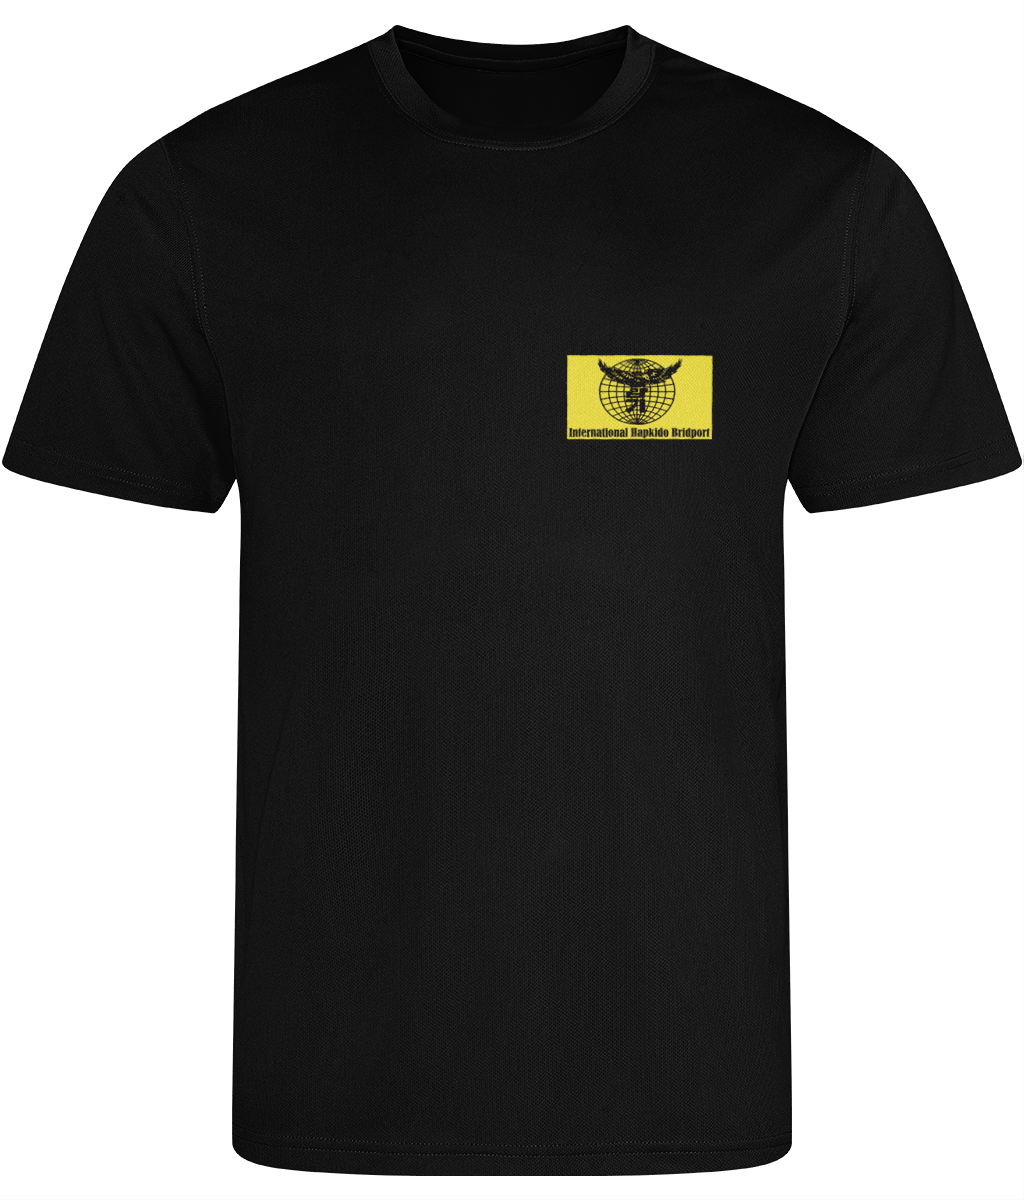 International Hapkido Bridport Men's Eco Sports T-shirt